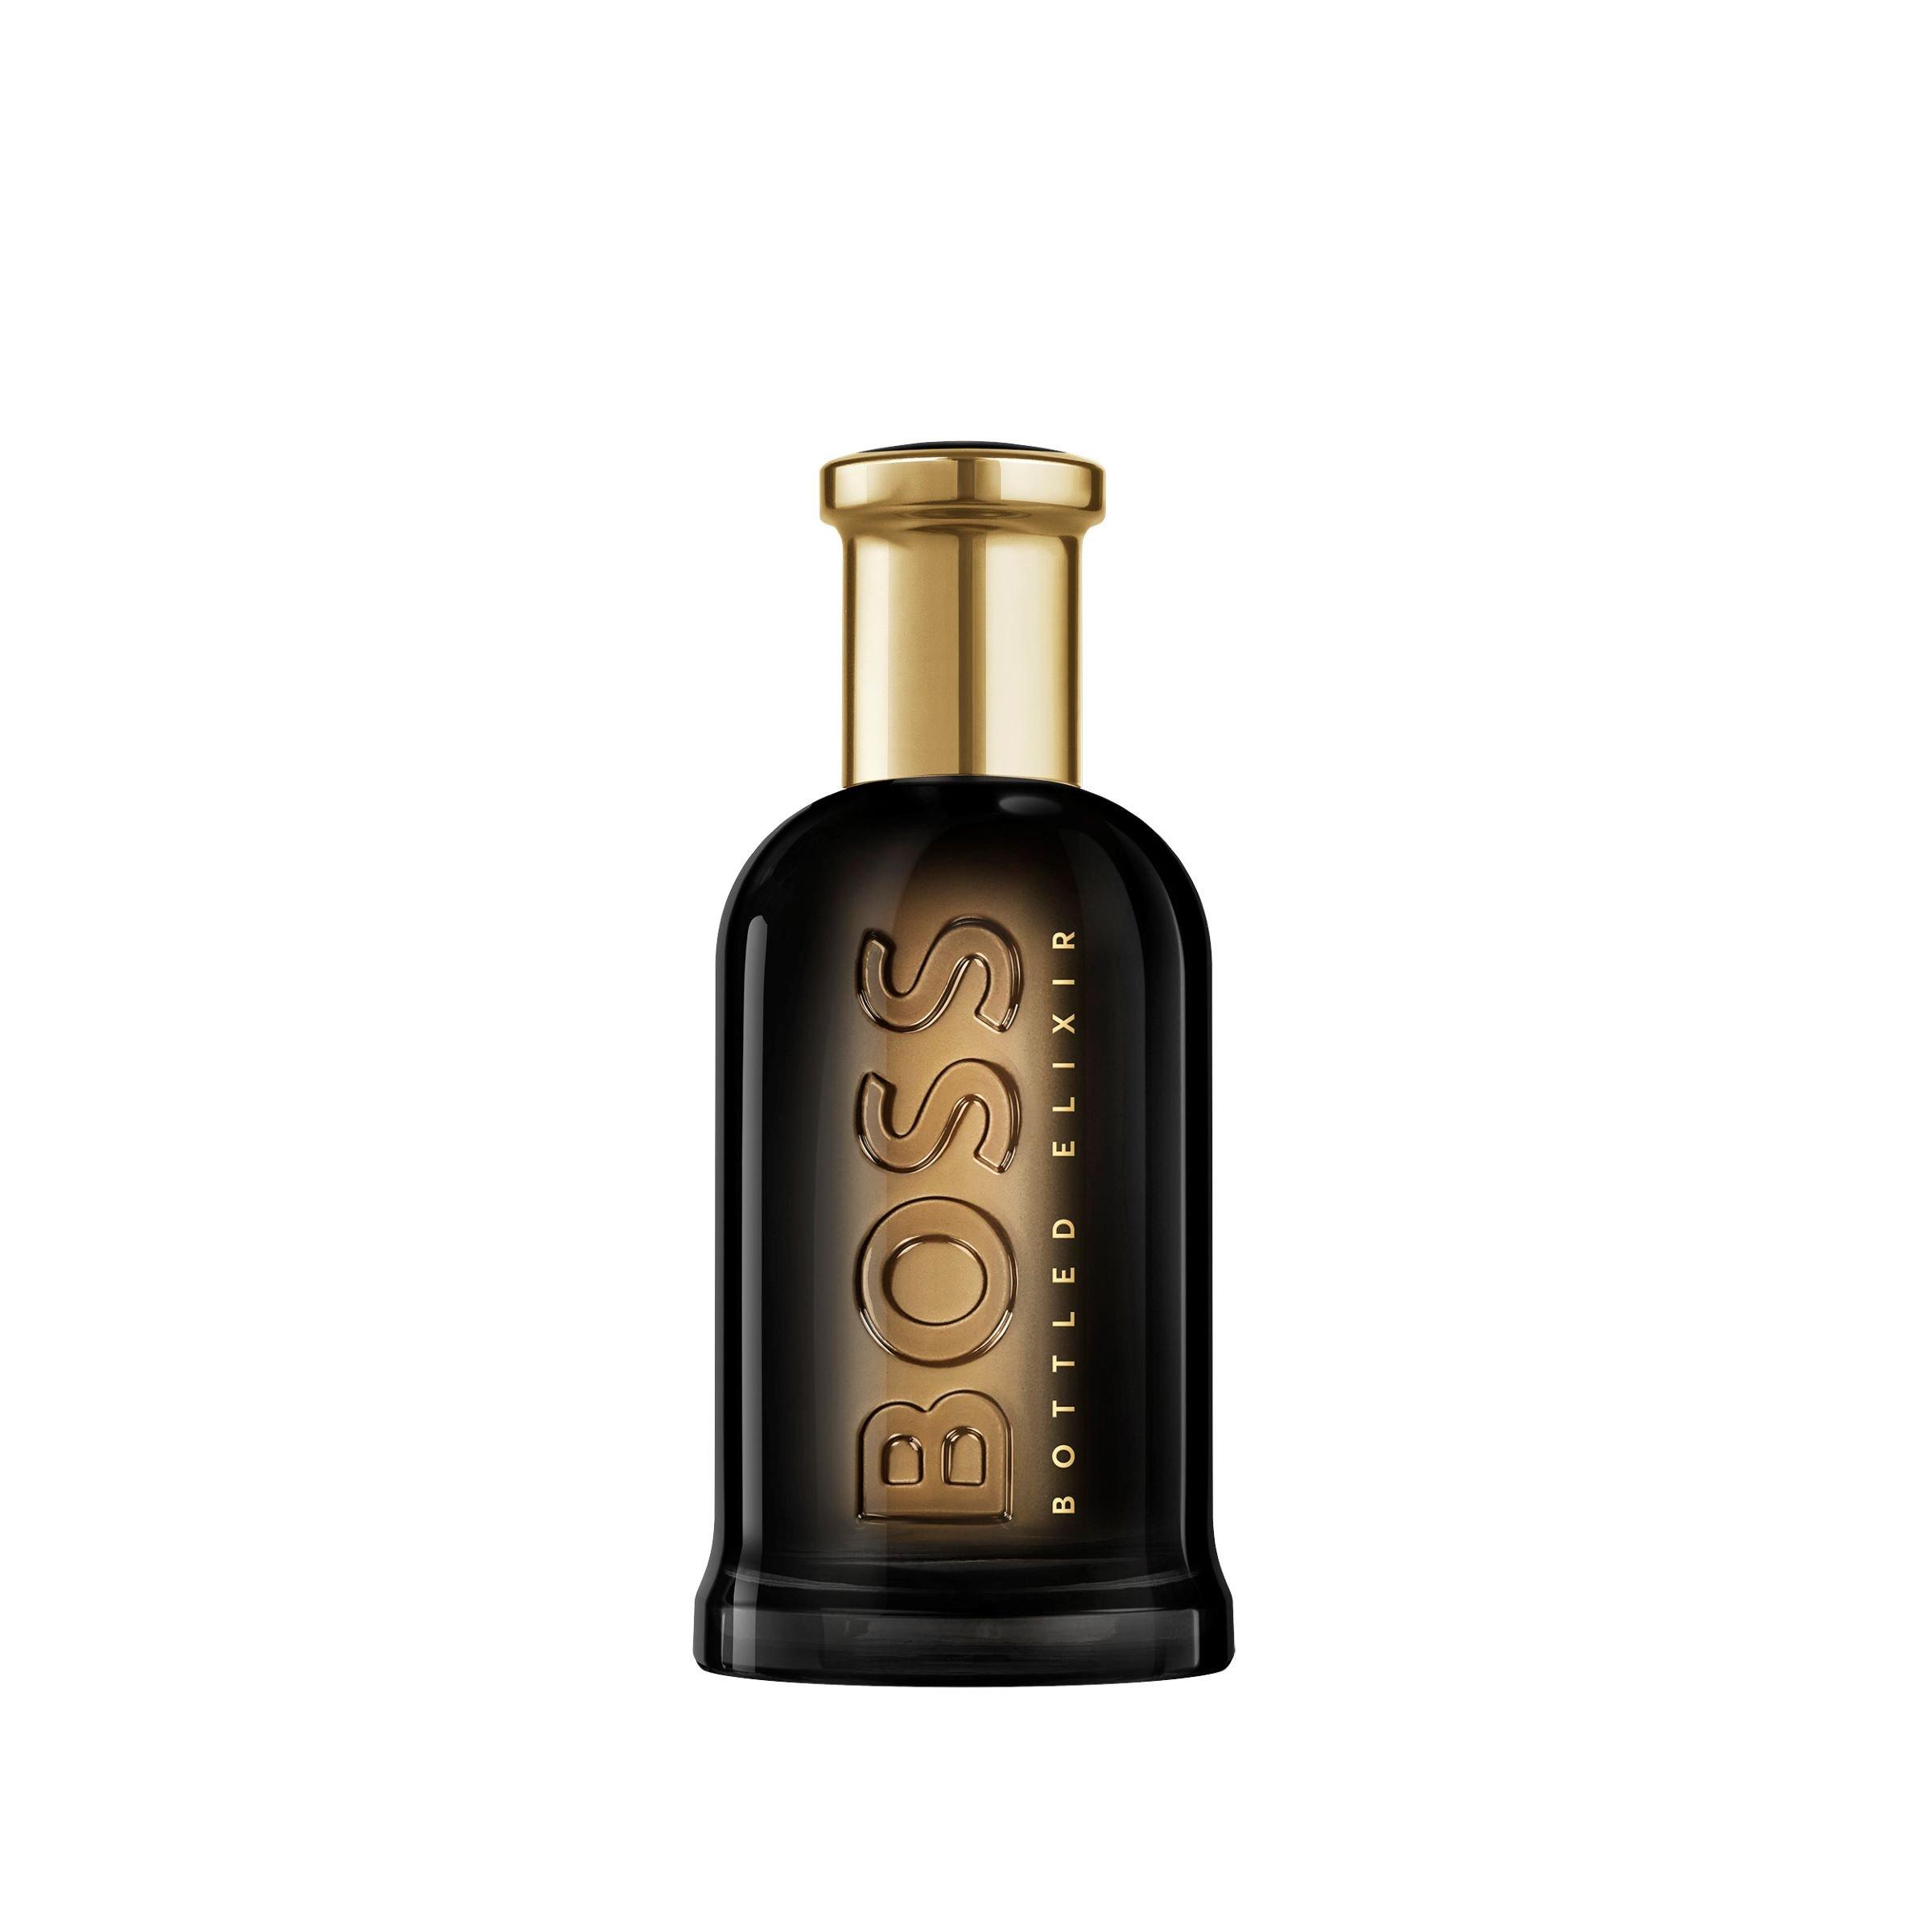 Boss Bottled Parfum by Hugo Boss » Reviews & Perfume Facts